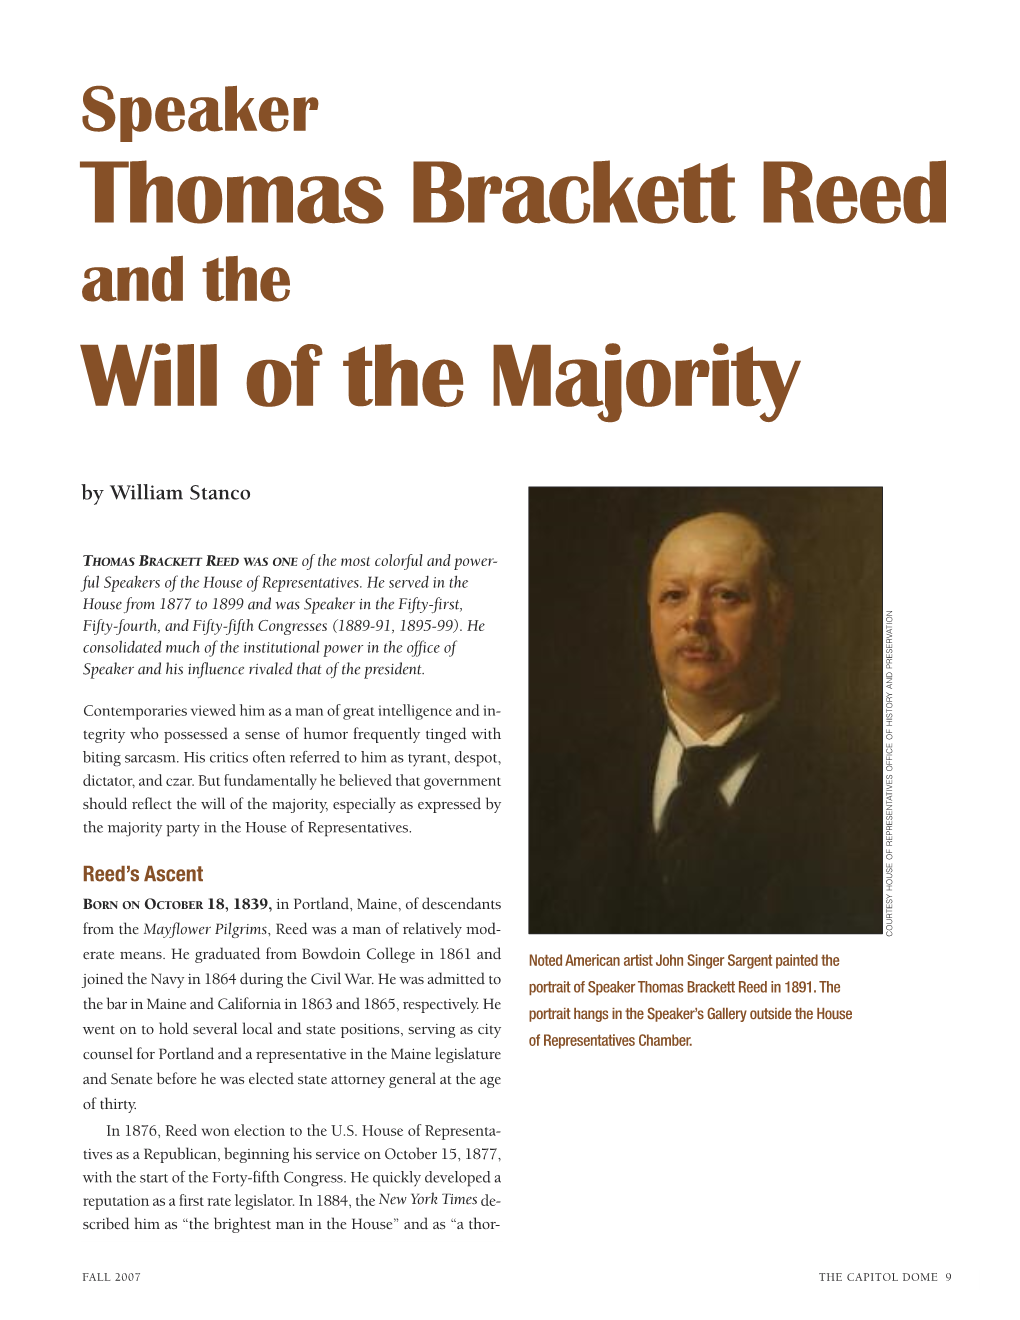 Thomas Brackett Reed As Speaker